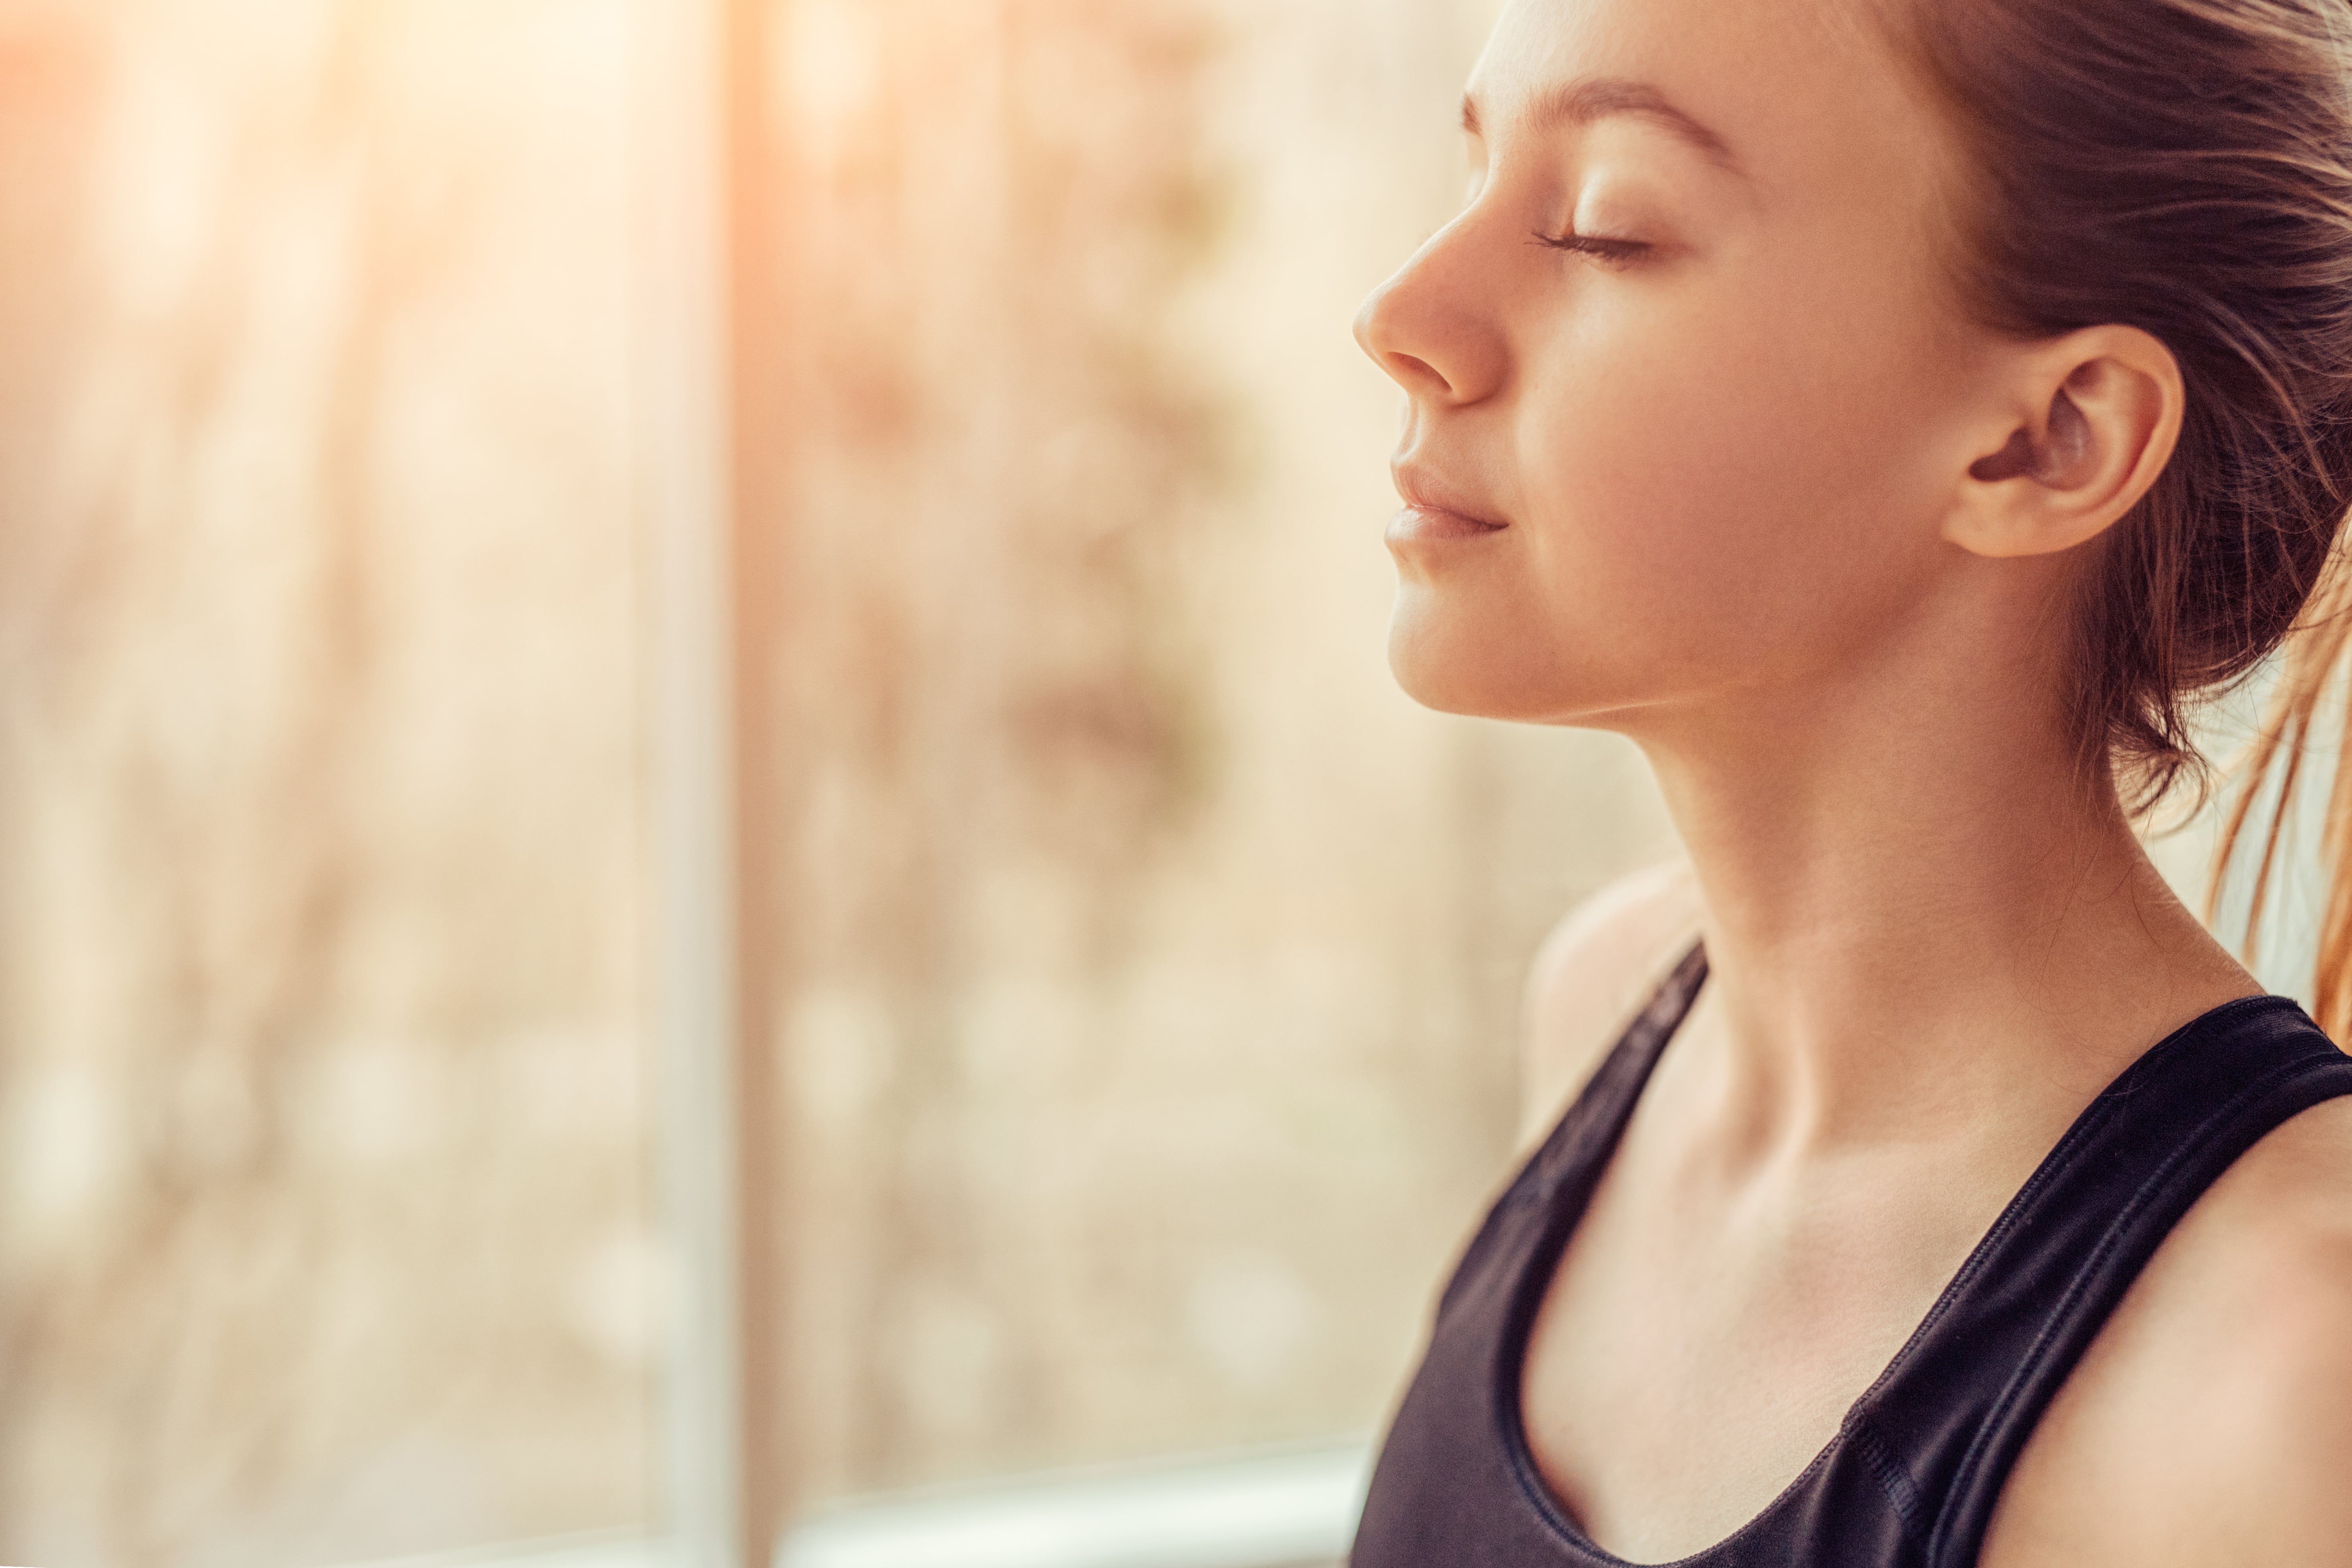 A lady practising mindful breathing exercises as the sunrise illuminates her face through the window.